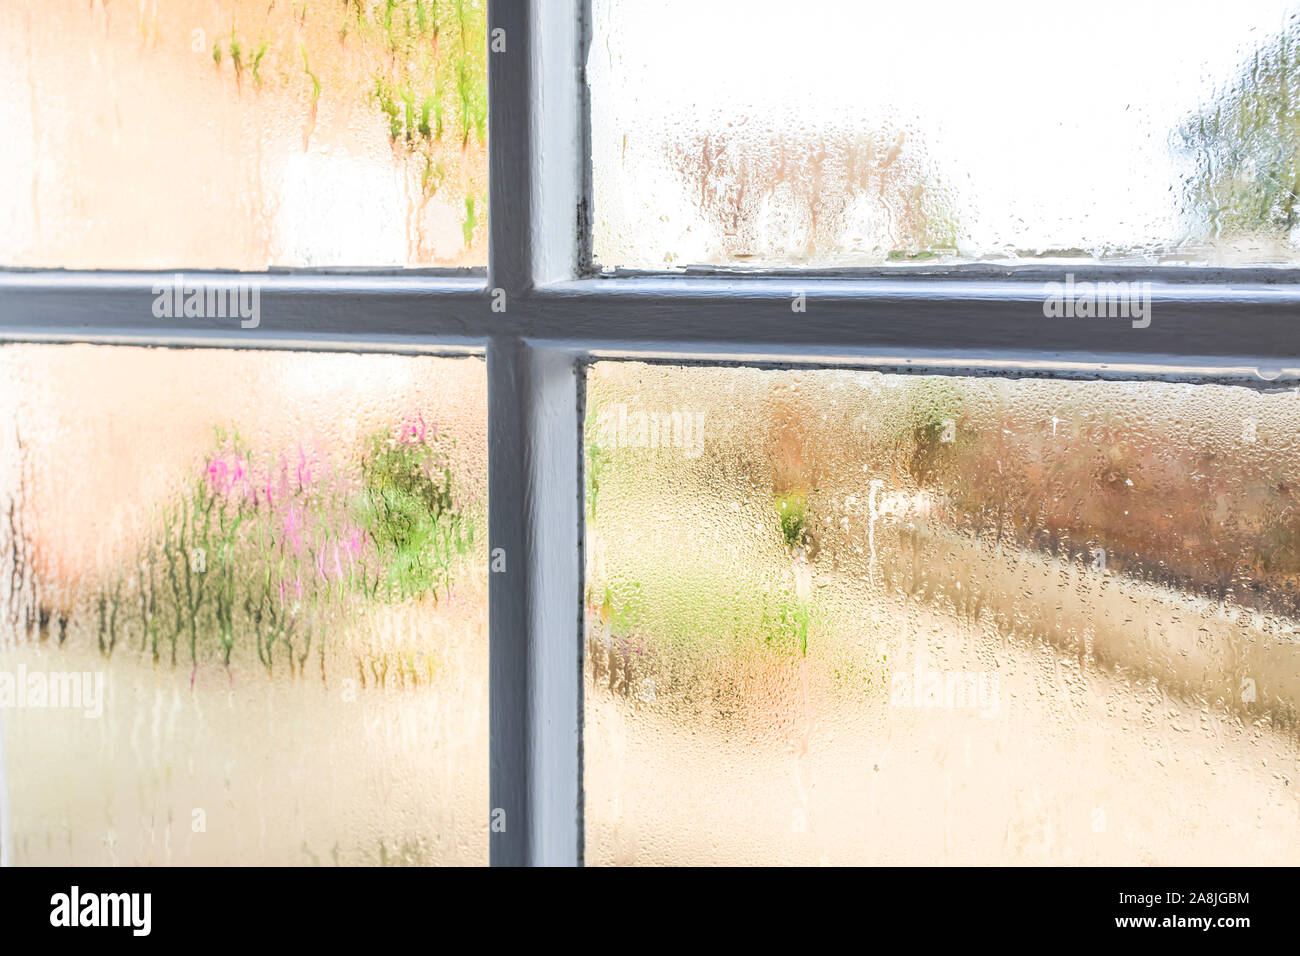 Condensation on window panes of an old sash window Stock Photo